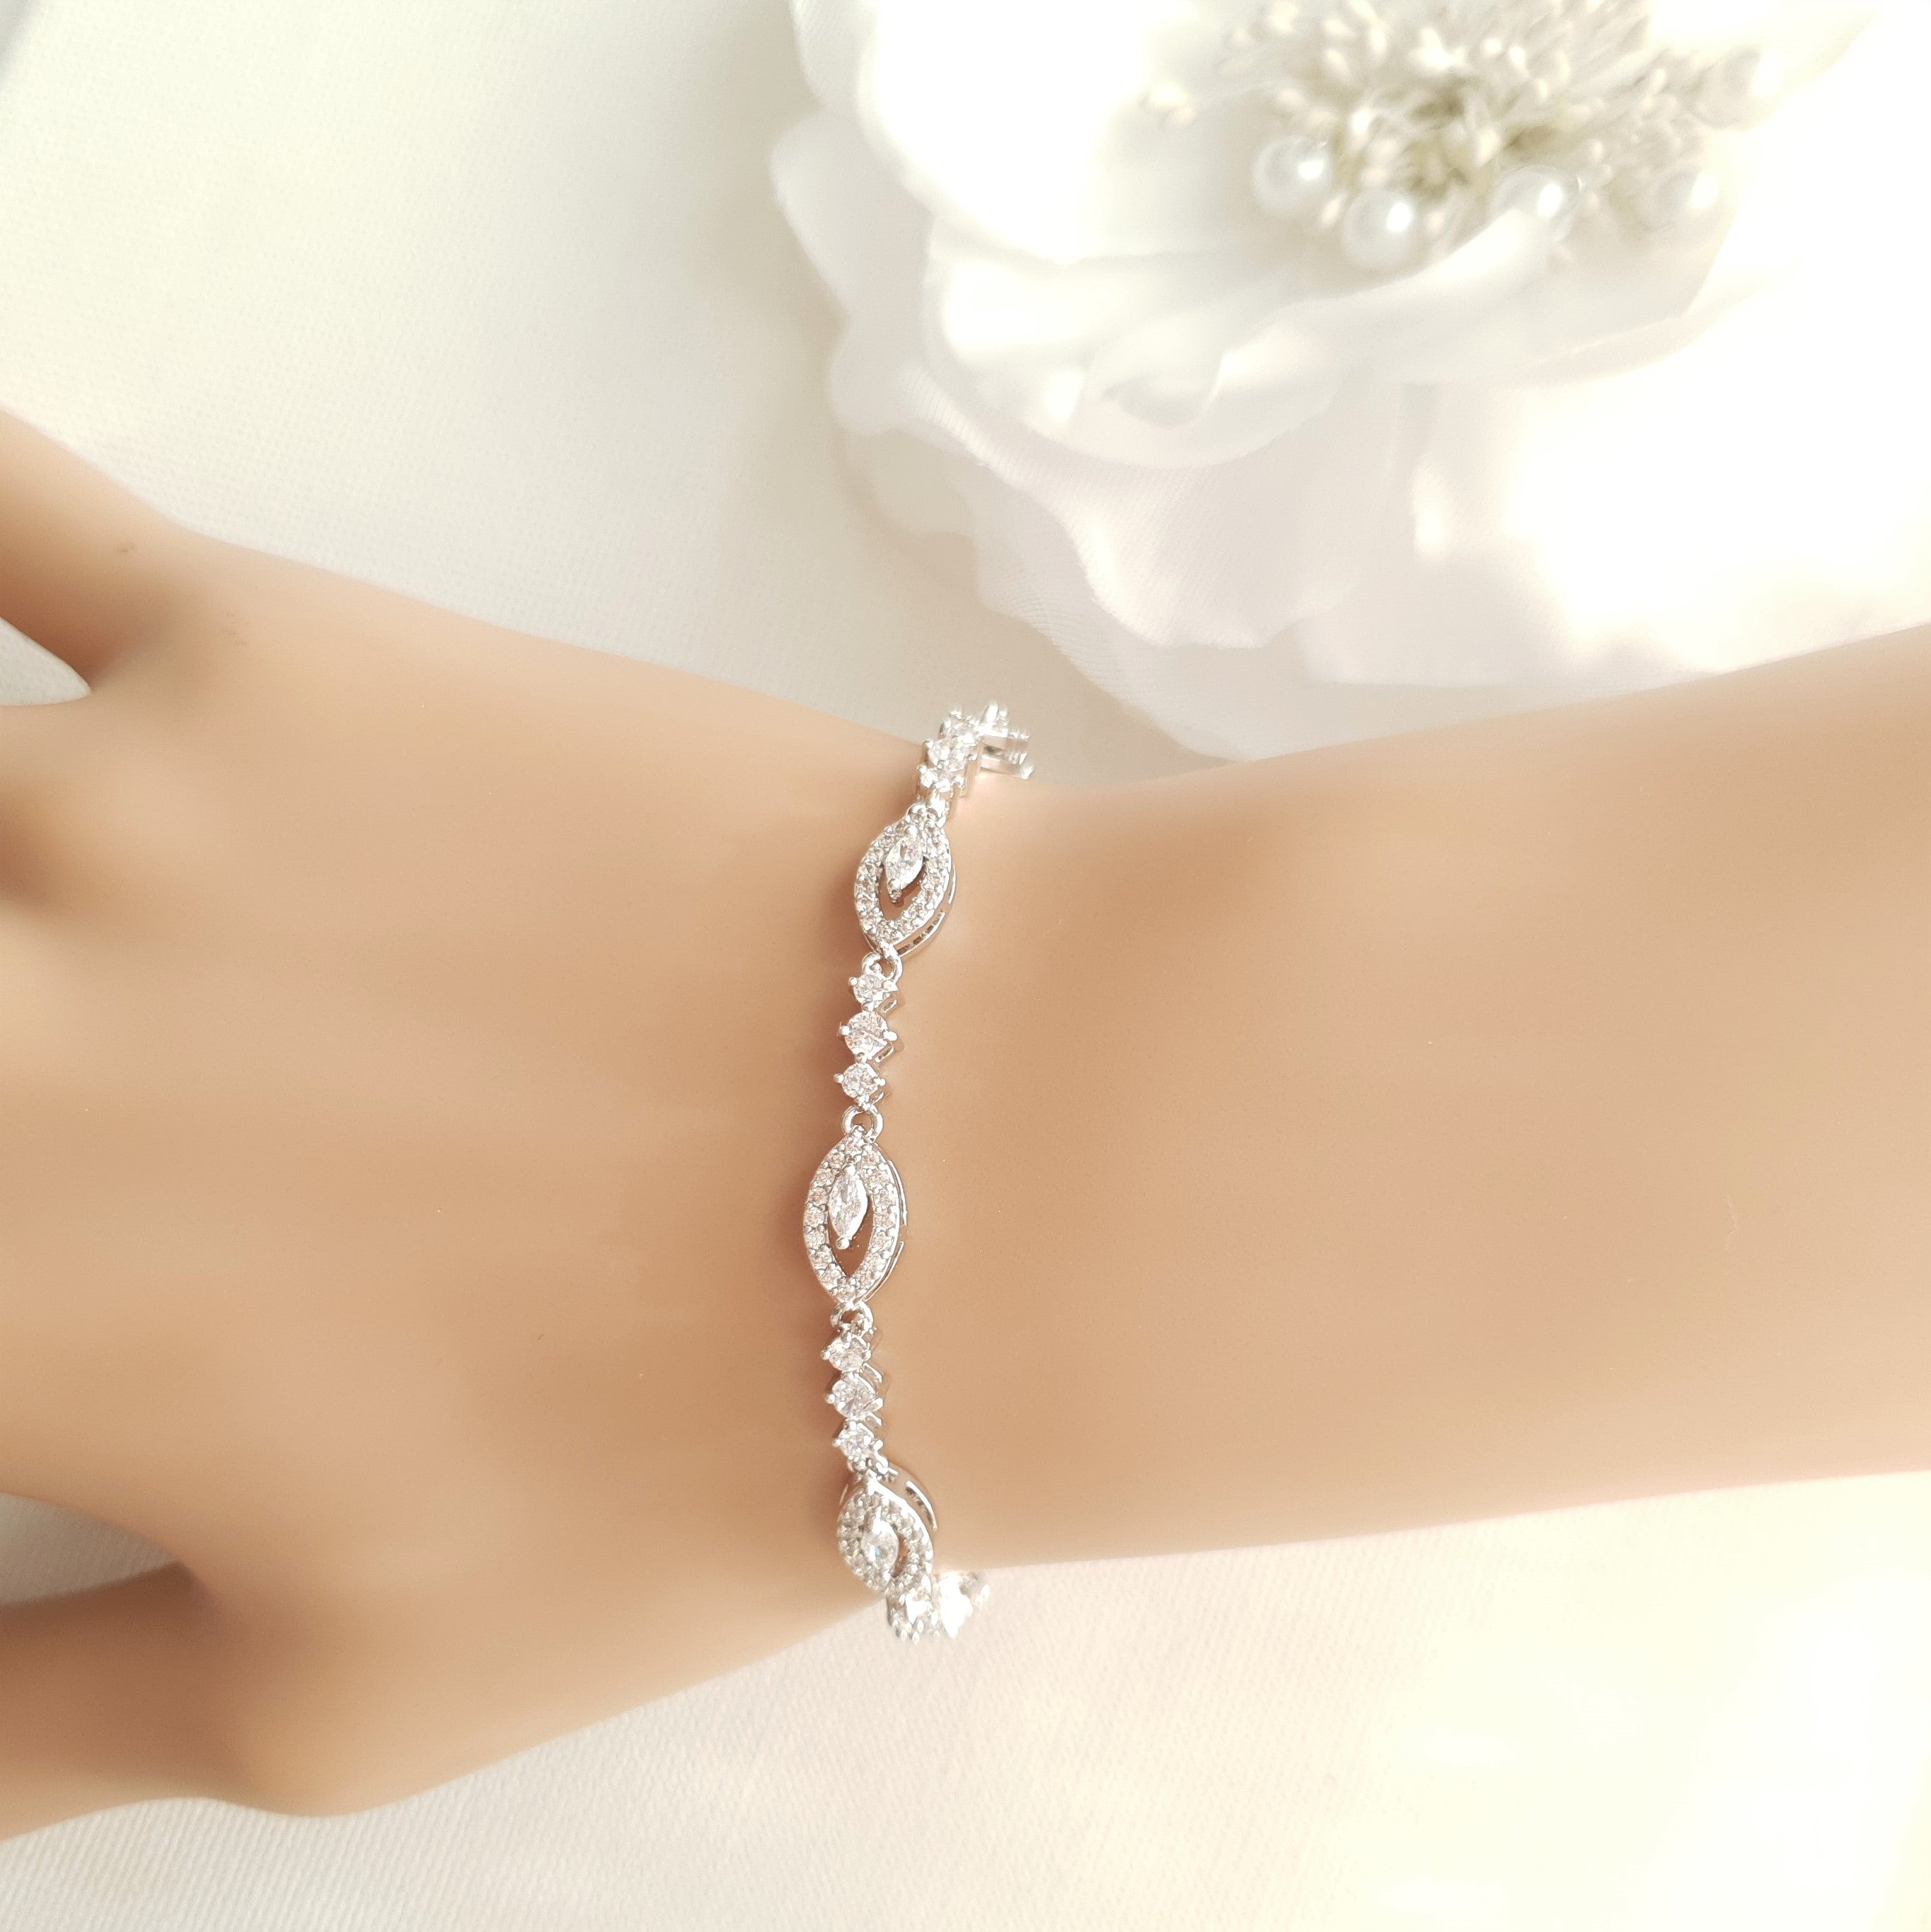 Love Brilliant Design Silver Color Bracelet For Women & Girls - Style  Lbra104 at Rs 200.00 | Silver Bracelets | ID: 26090787912